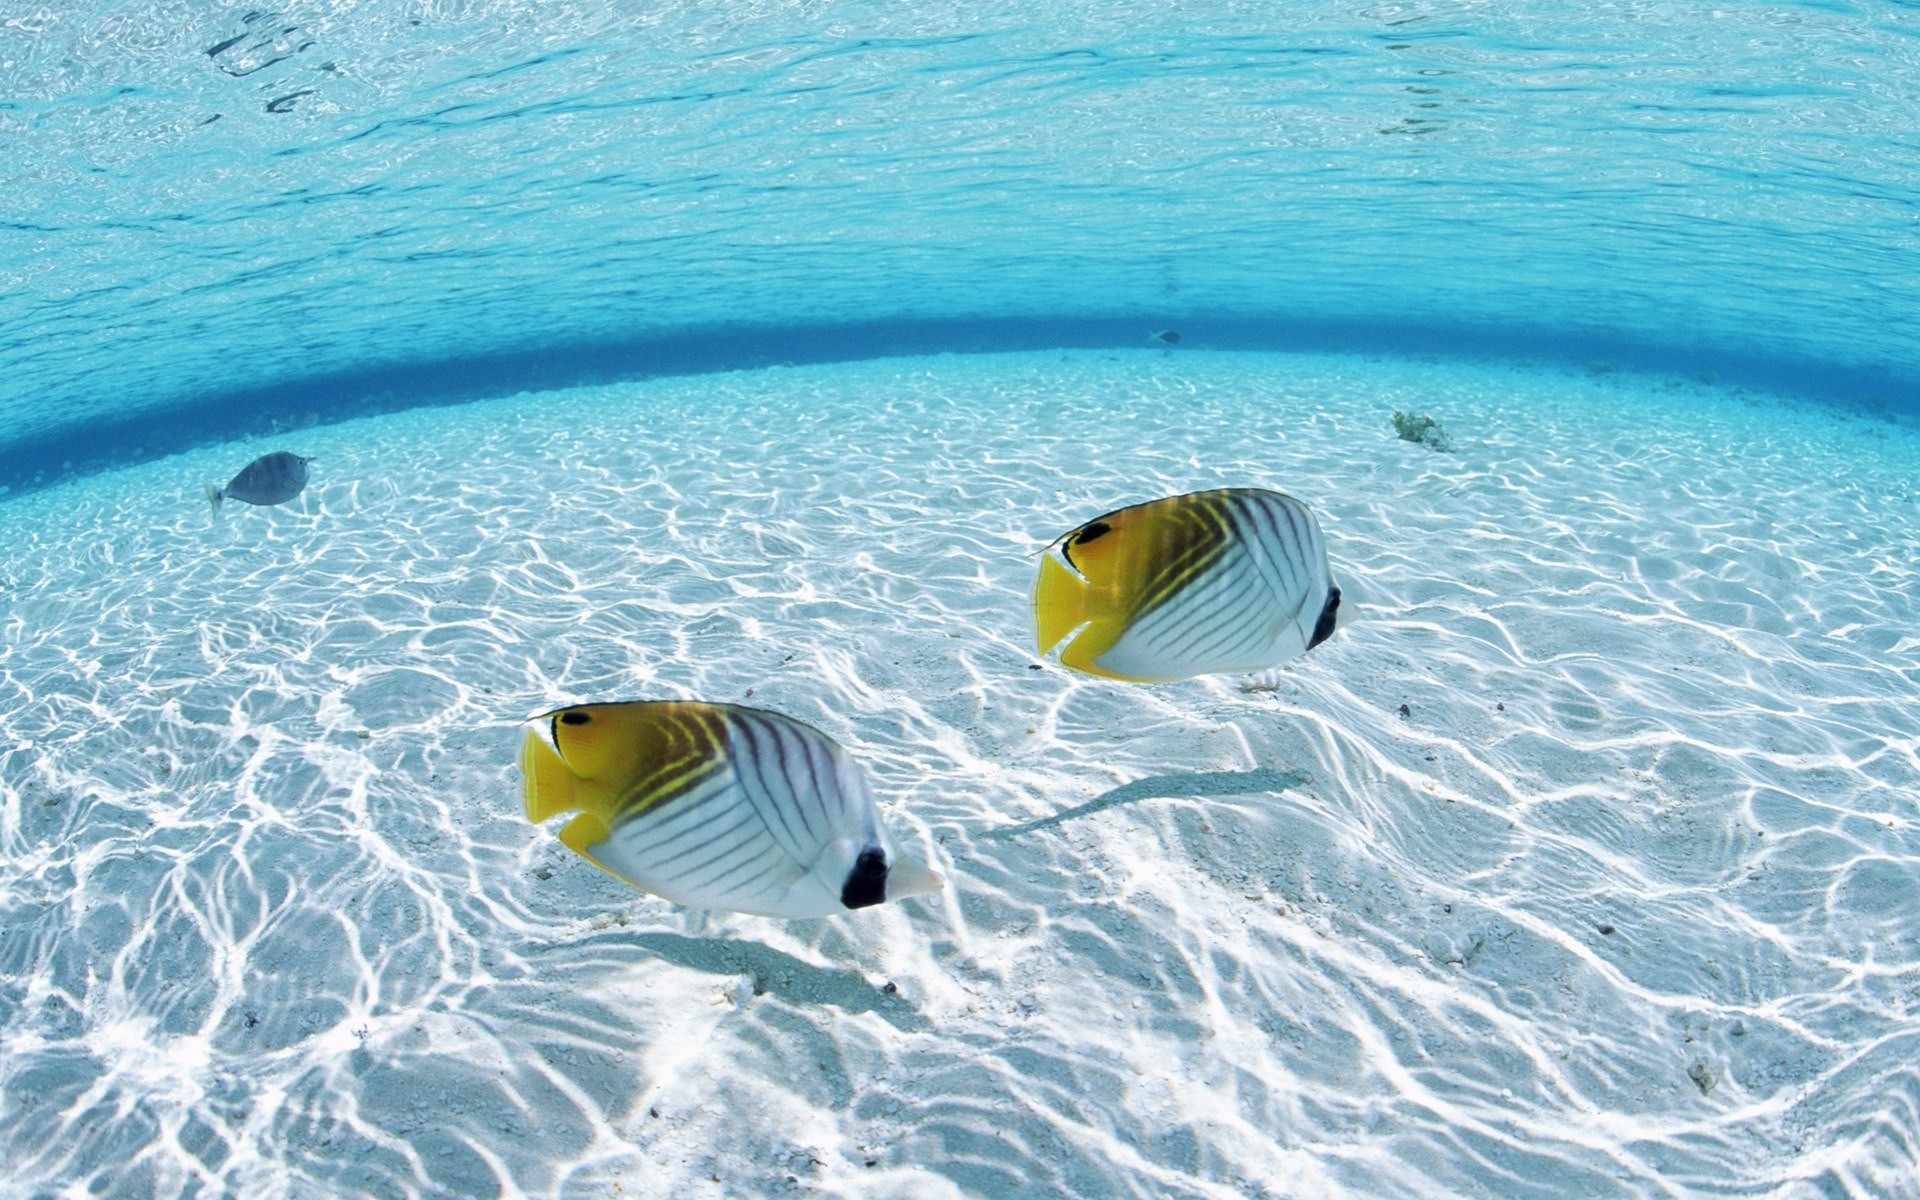 the ocean desktop wallpaper download fish in the ocean wallpaper in hd .